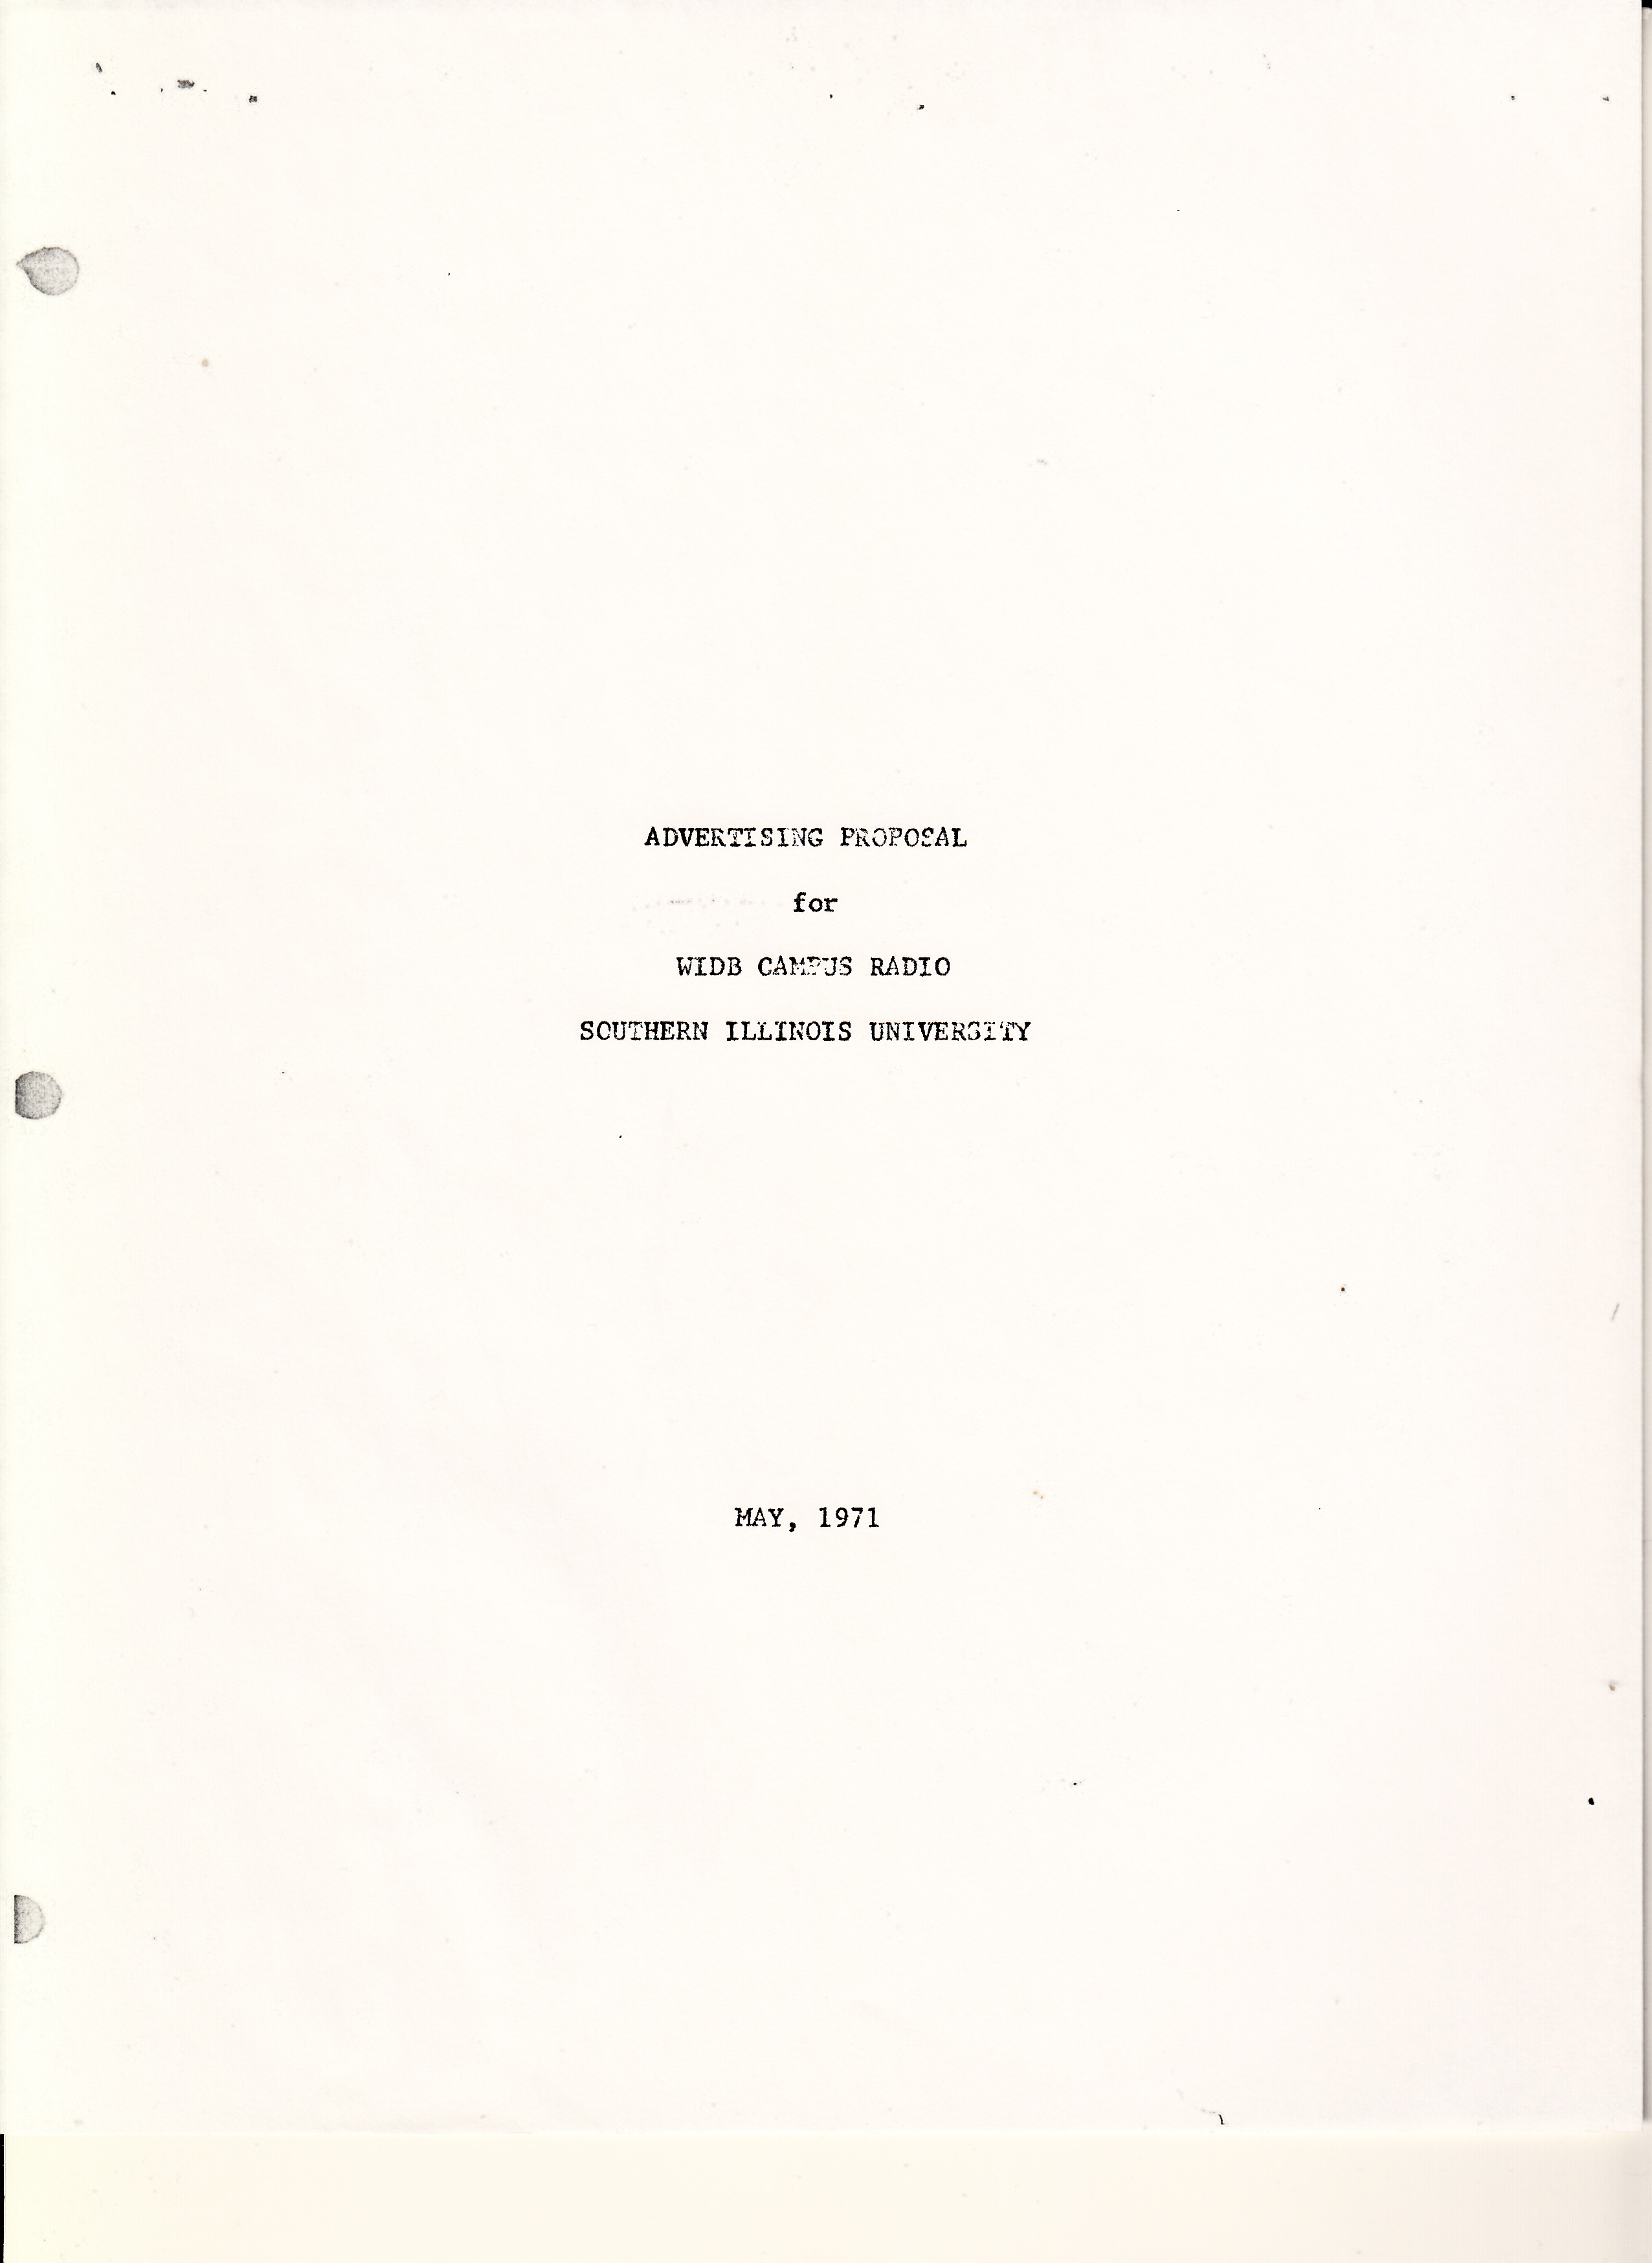 Original WIDB Sales Proposal, 1971